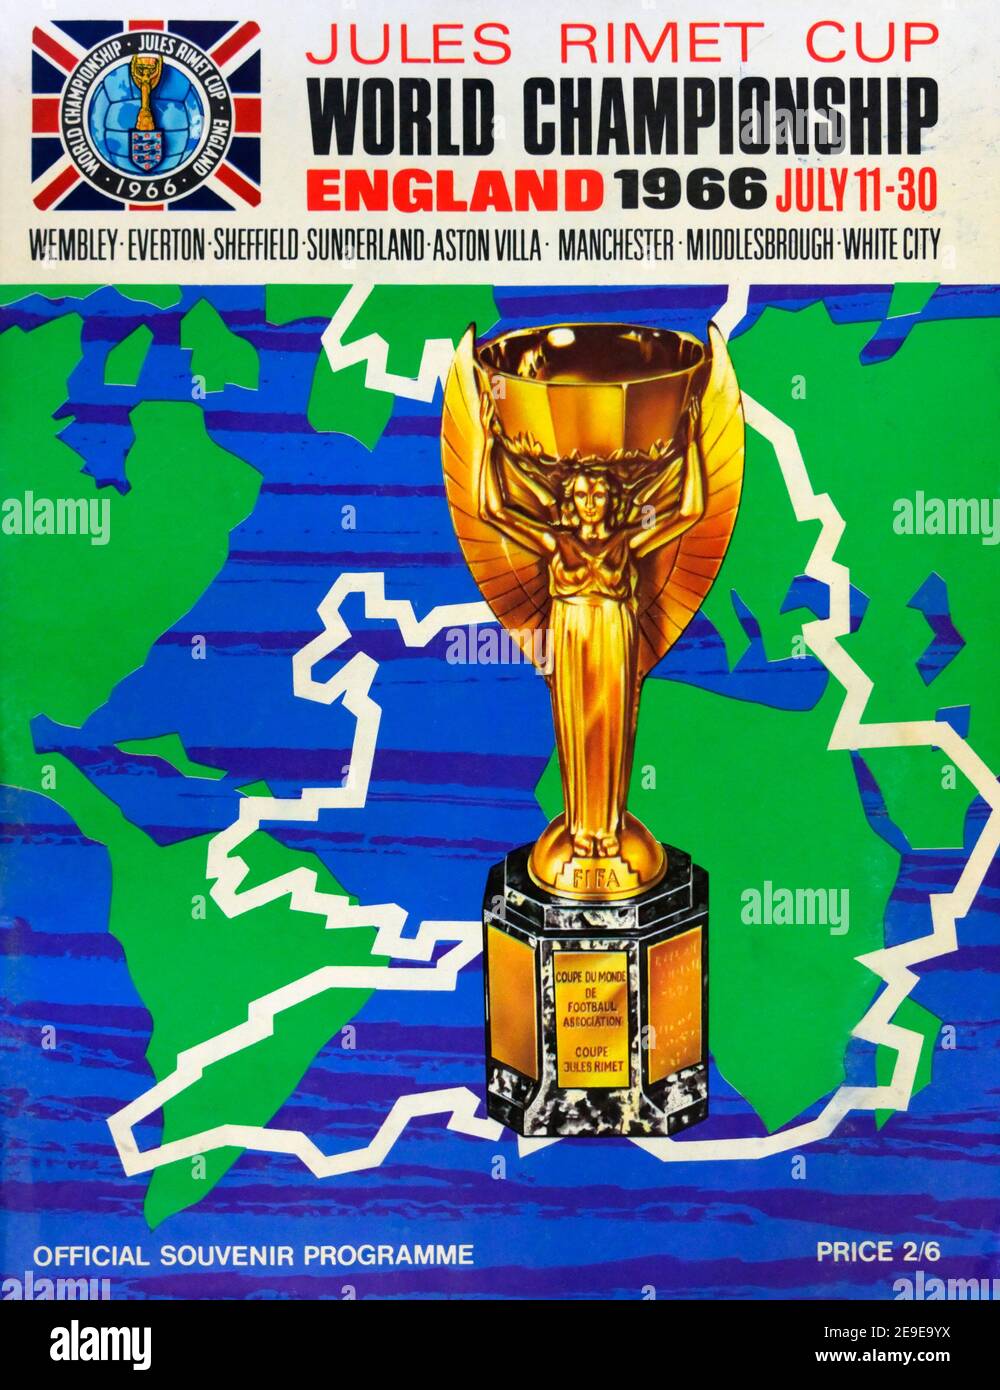 Football programme. Jules Rimet Cup World Championship England 1966. July 11-30. Official Souvenir Programme. Price 2/6. Stock Photo